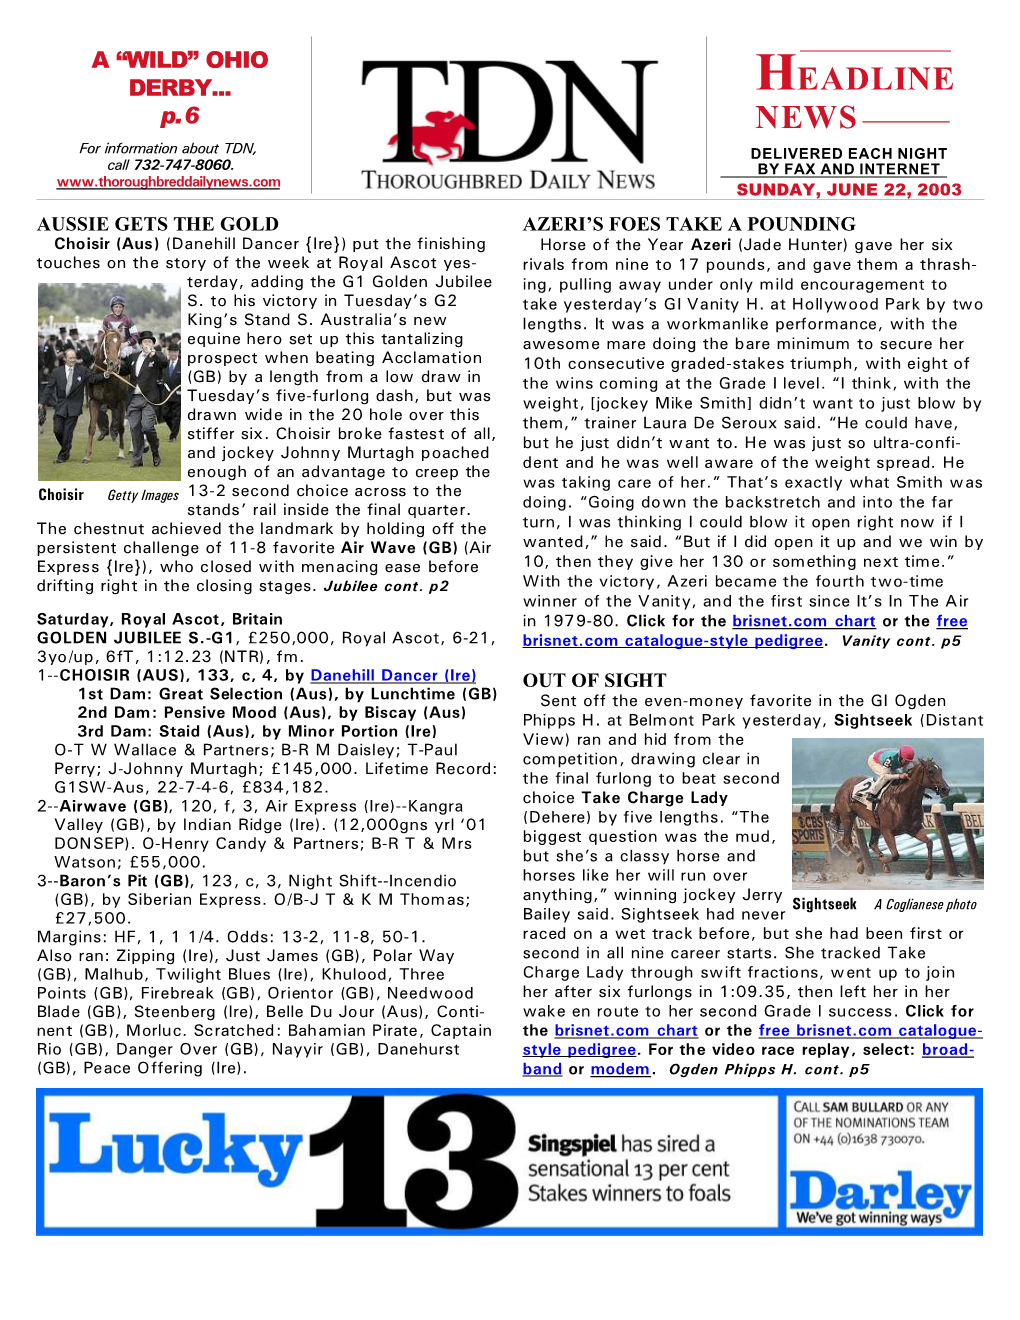 HEADLINE NEWS • 6/22/03 • PAGE 2 of 9